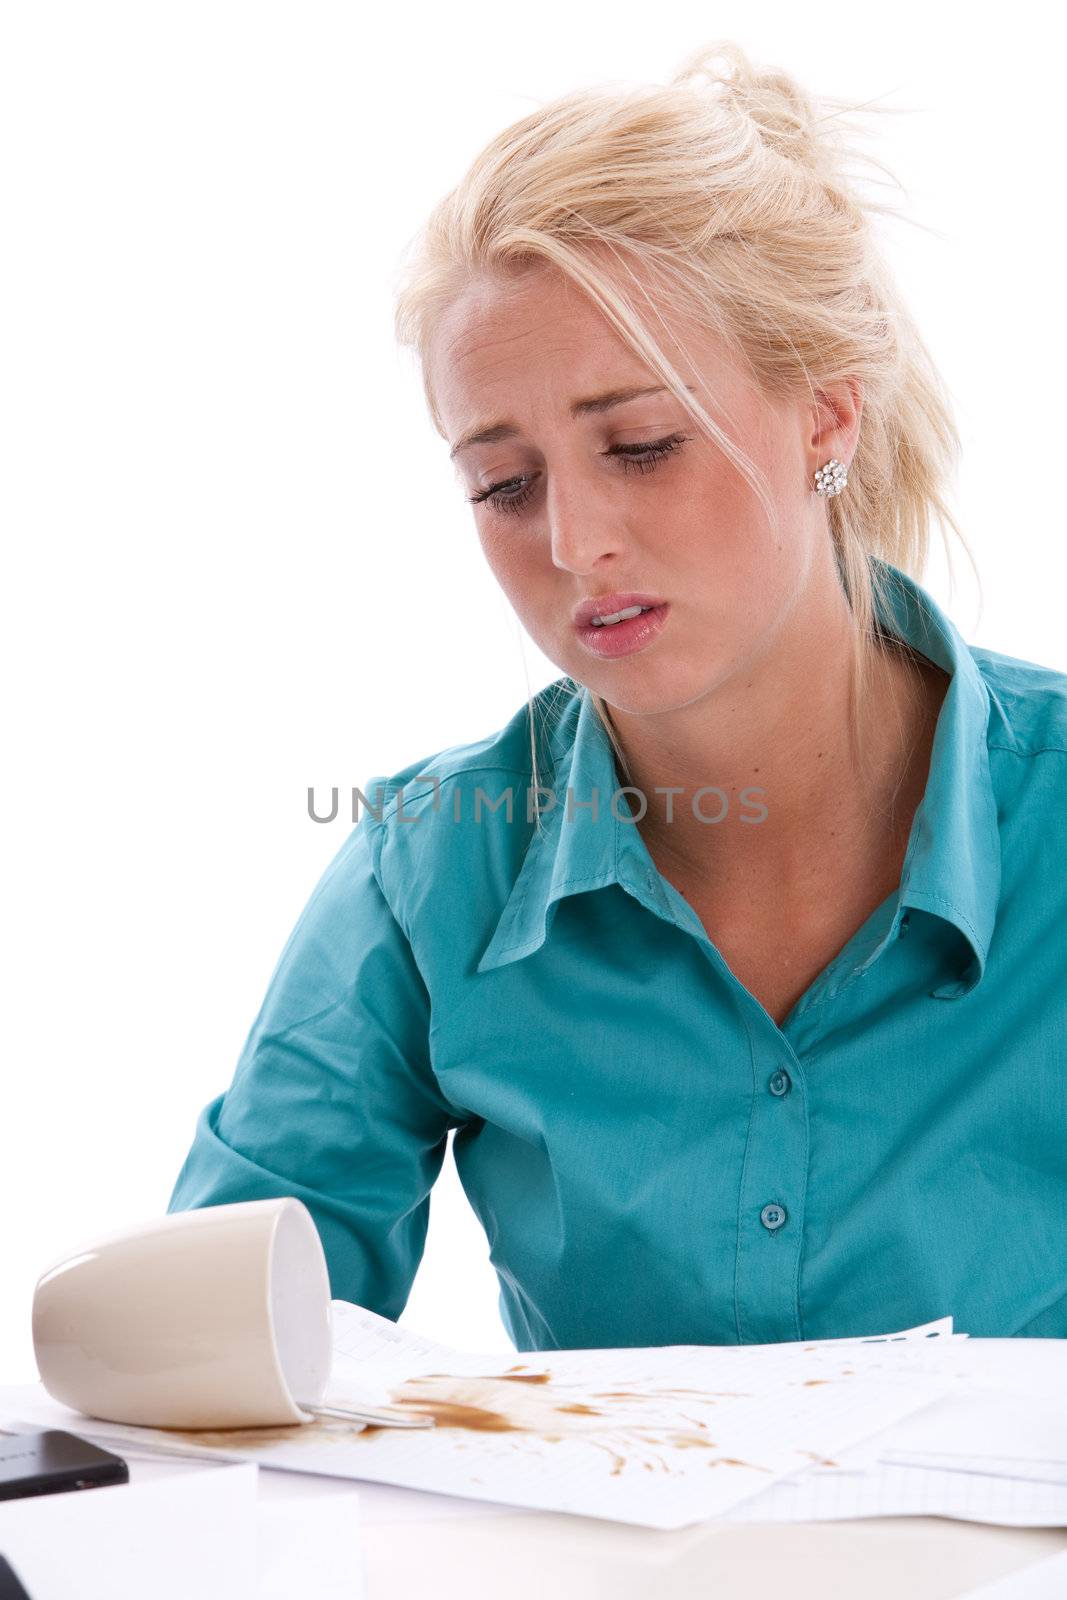 Secretary behind her papers having thrown coffee over it